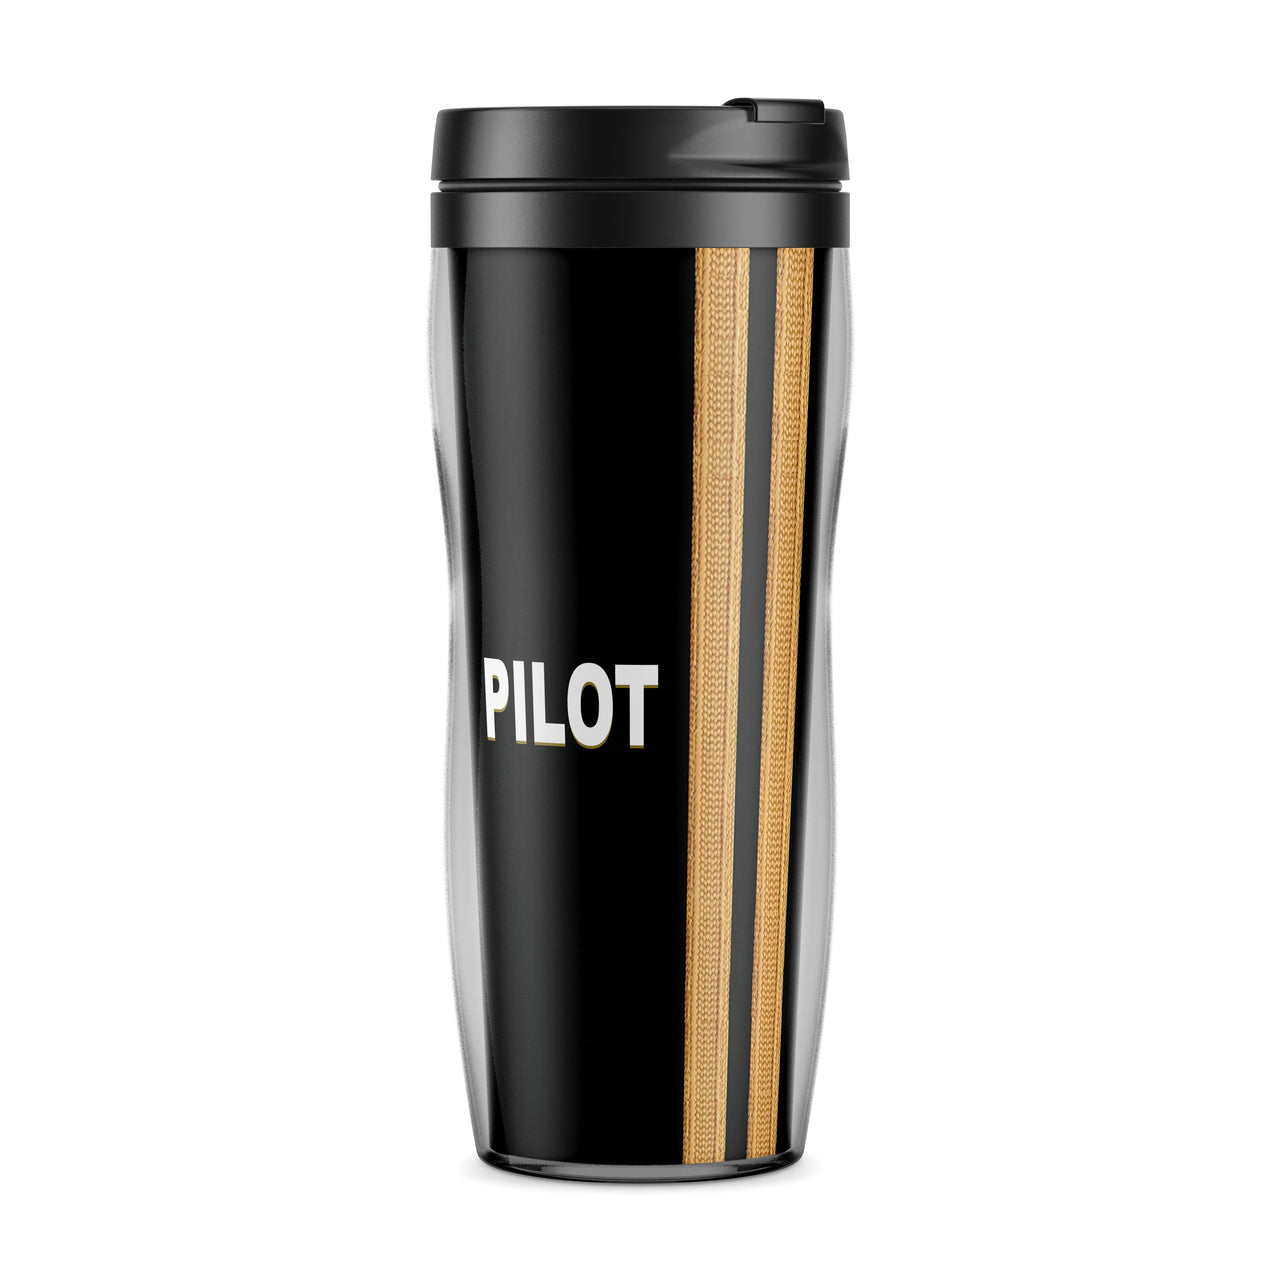 PILOT & Epaulettes (4,3,2 Lines) Designed Plastic Travel Mugs